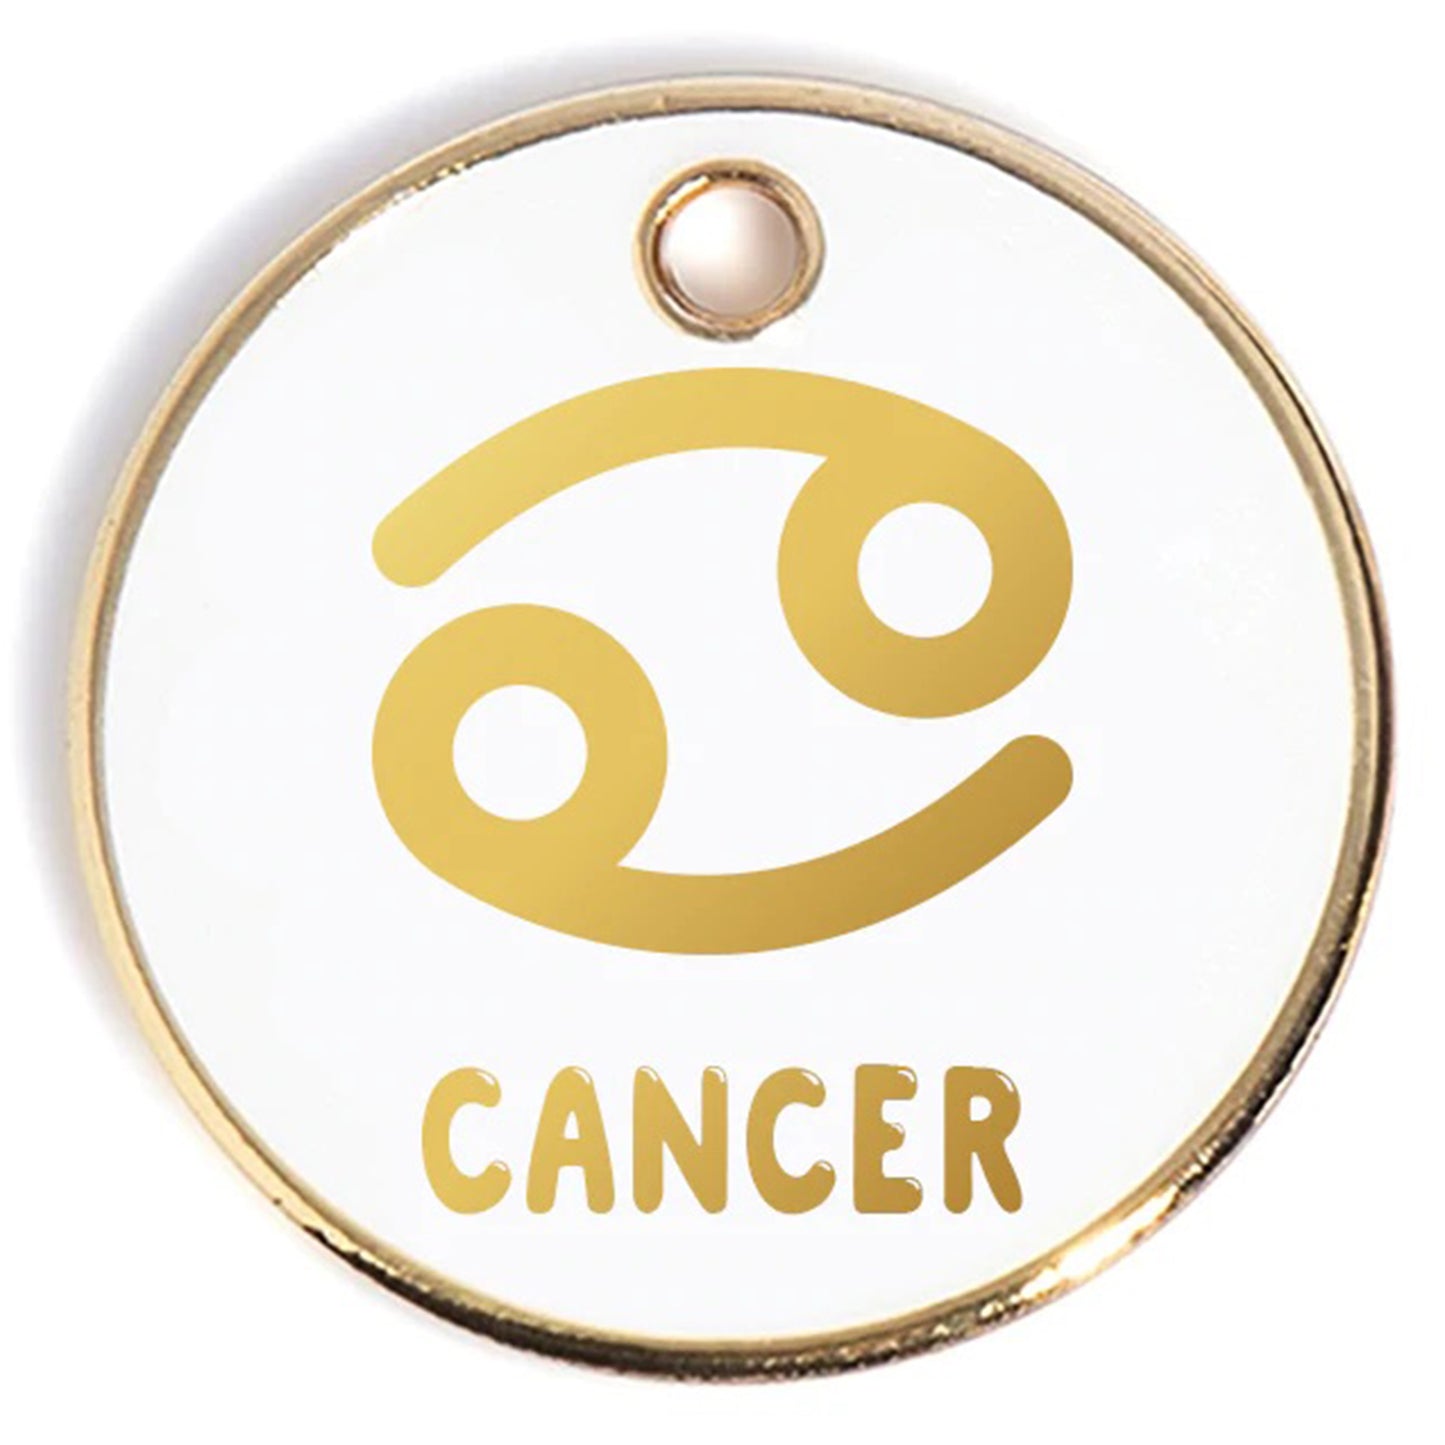 Cancer Tag